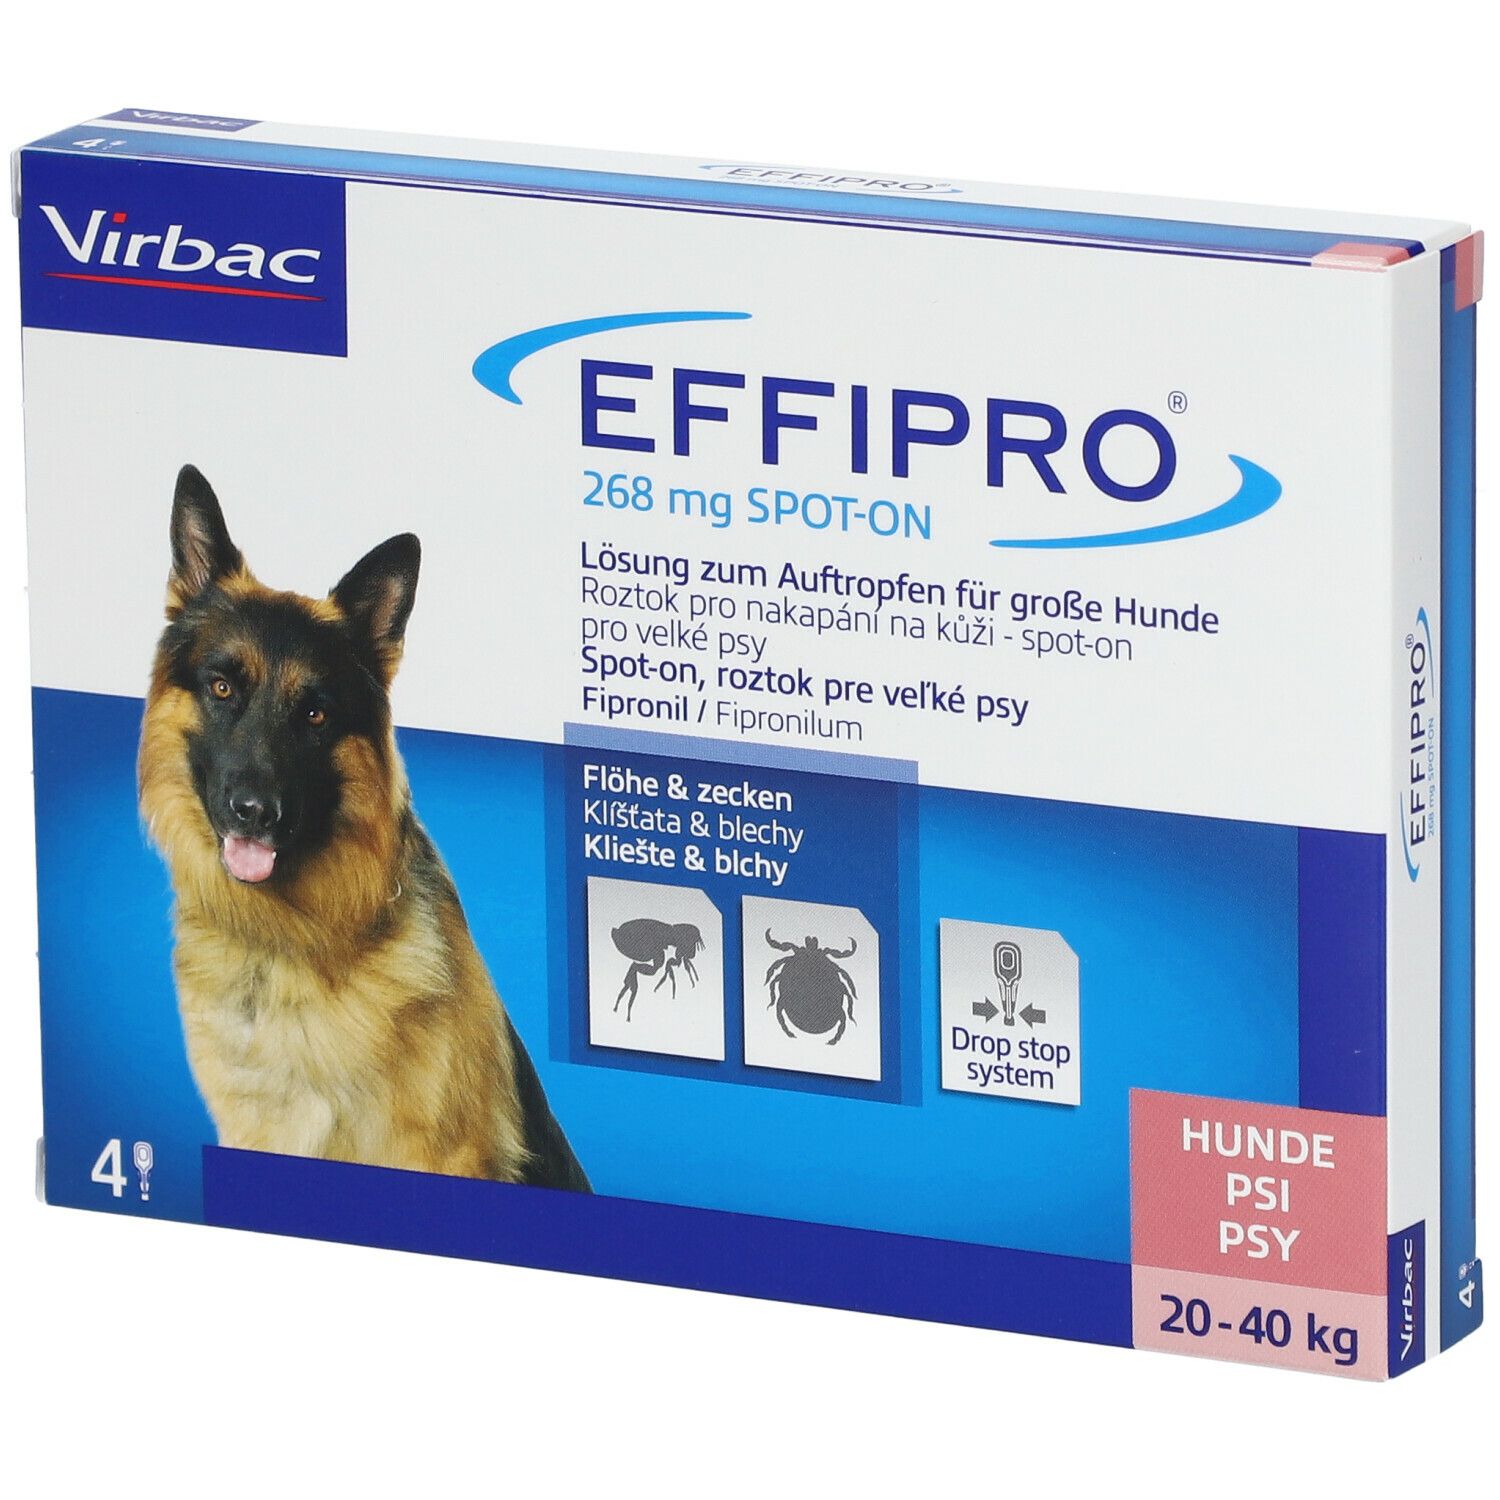 Antiparasitikum - 4 St SHOP EFFIPRO® Spot-on 268 APOTHEKE mg